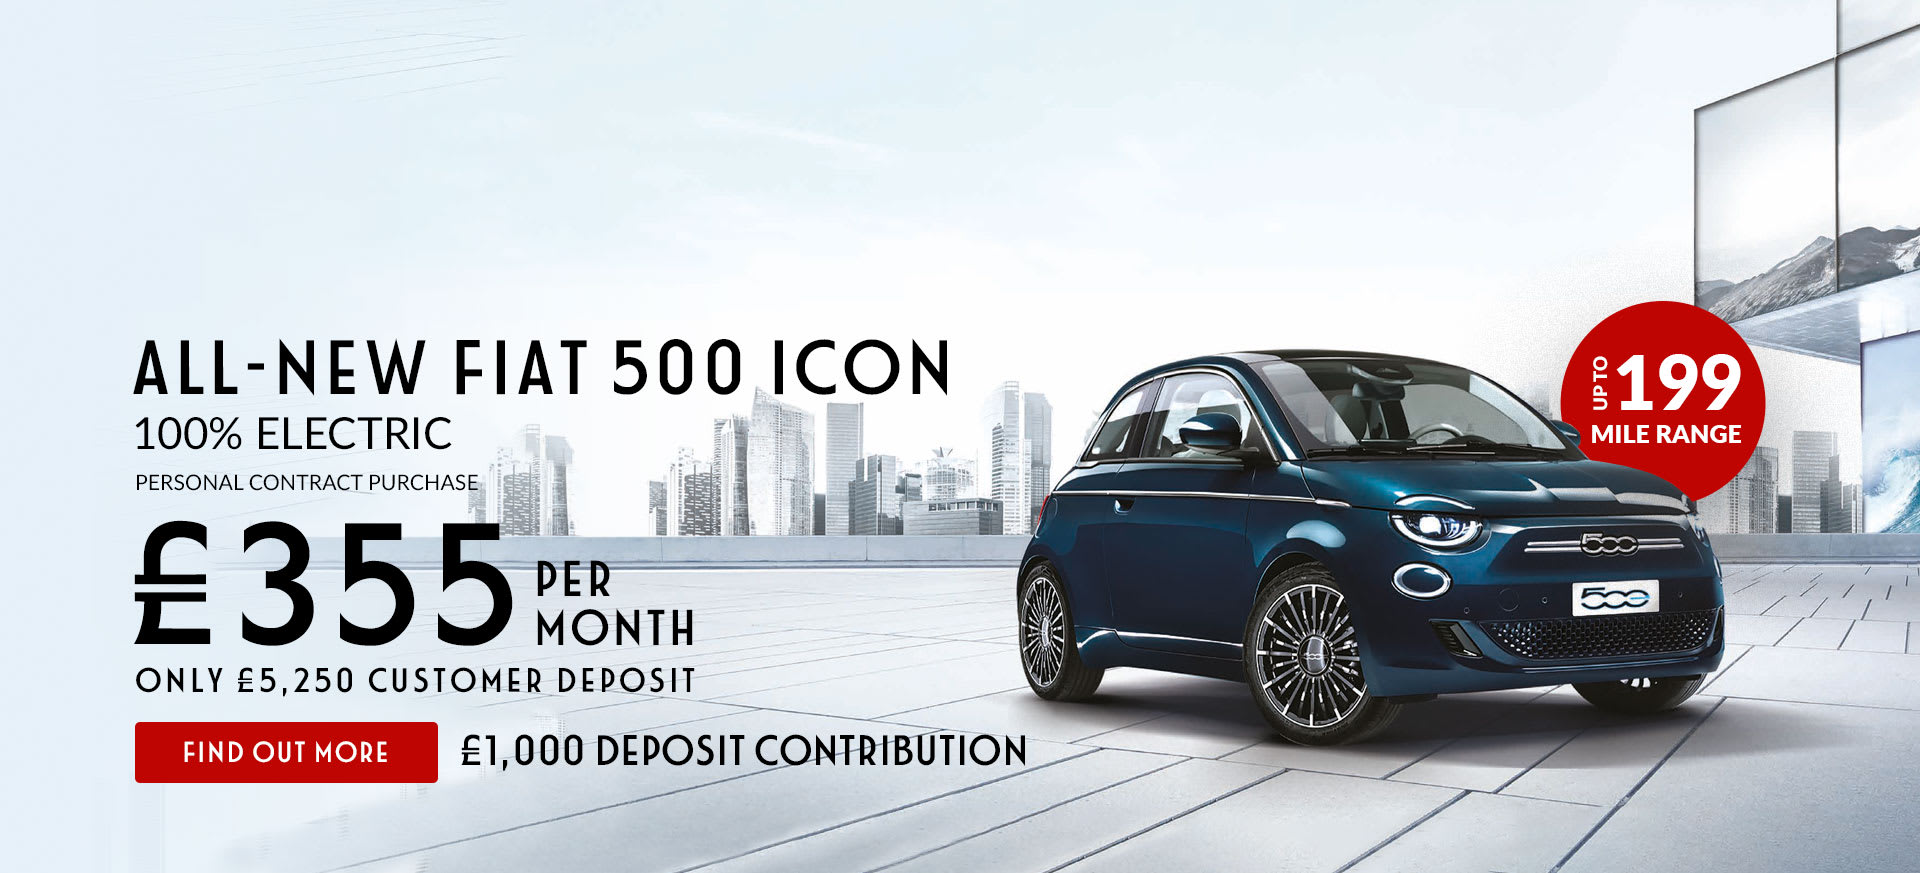 New Fiat 500 Electric Icon